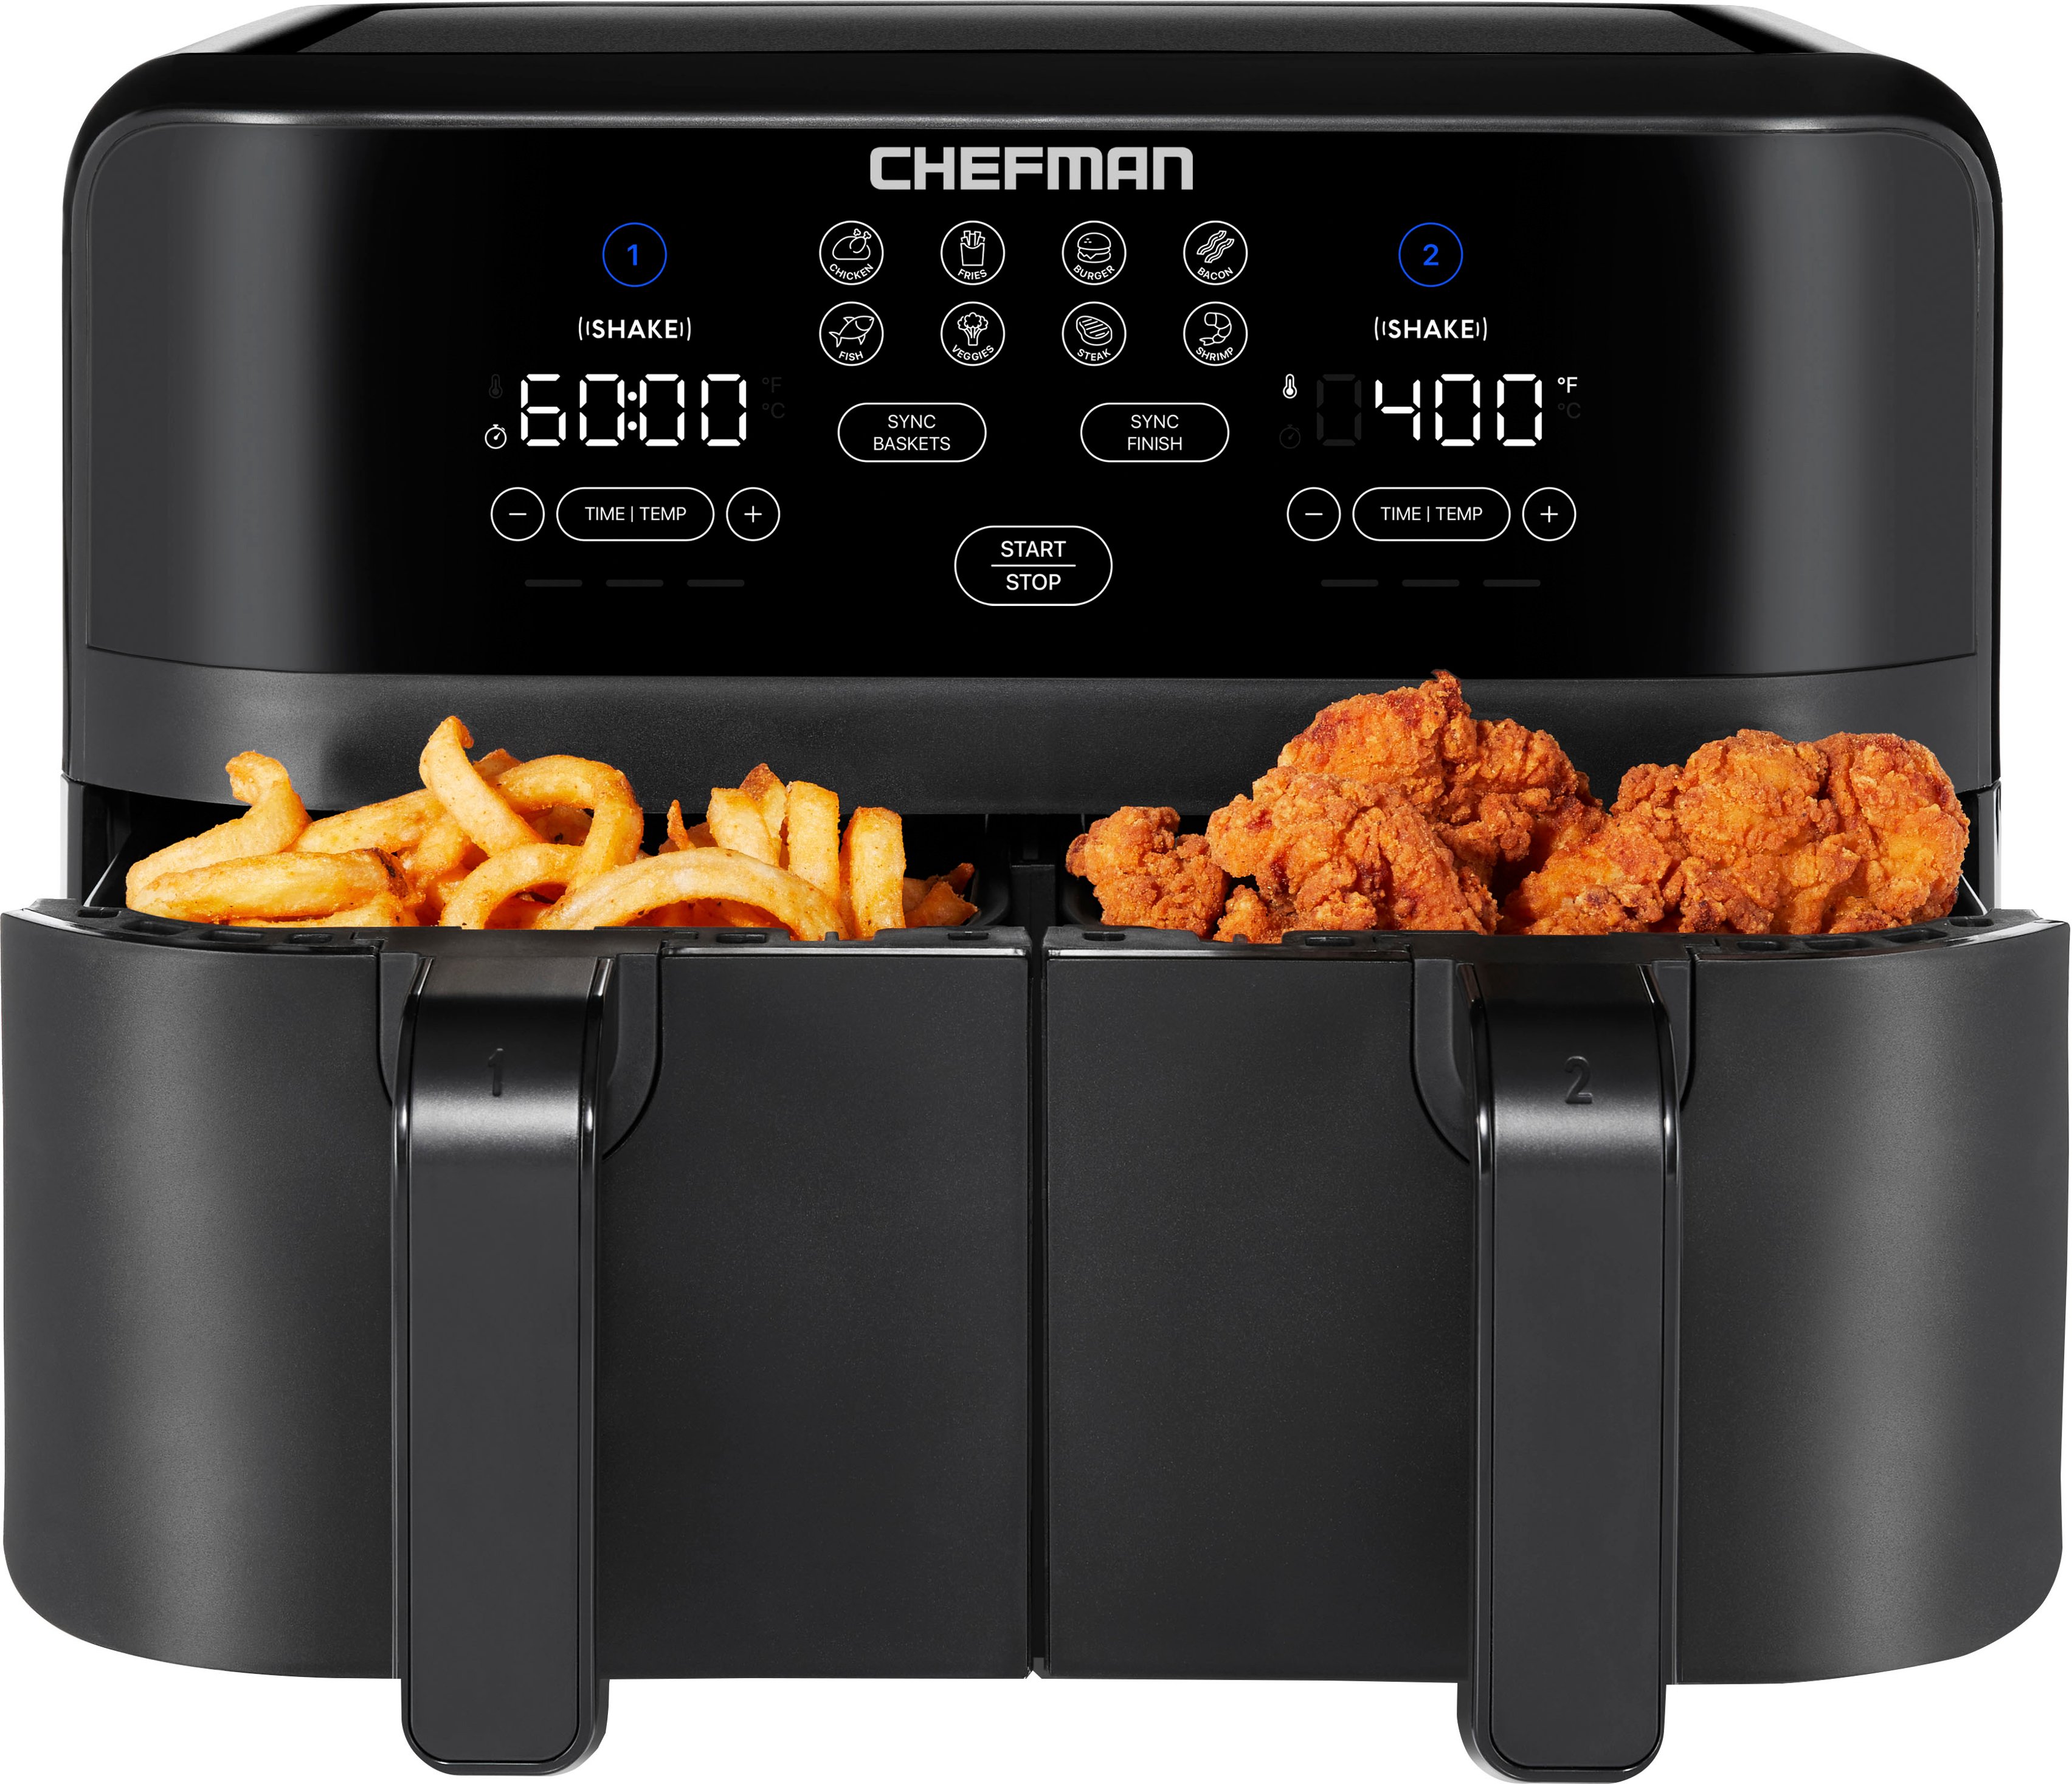 Chefman 9-Quart TurboFry Digital Touch Dual Basket Air Fryer (Matte Black) $70